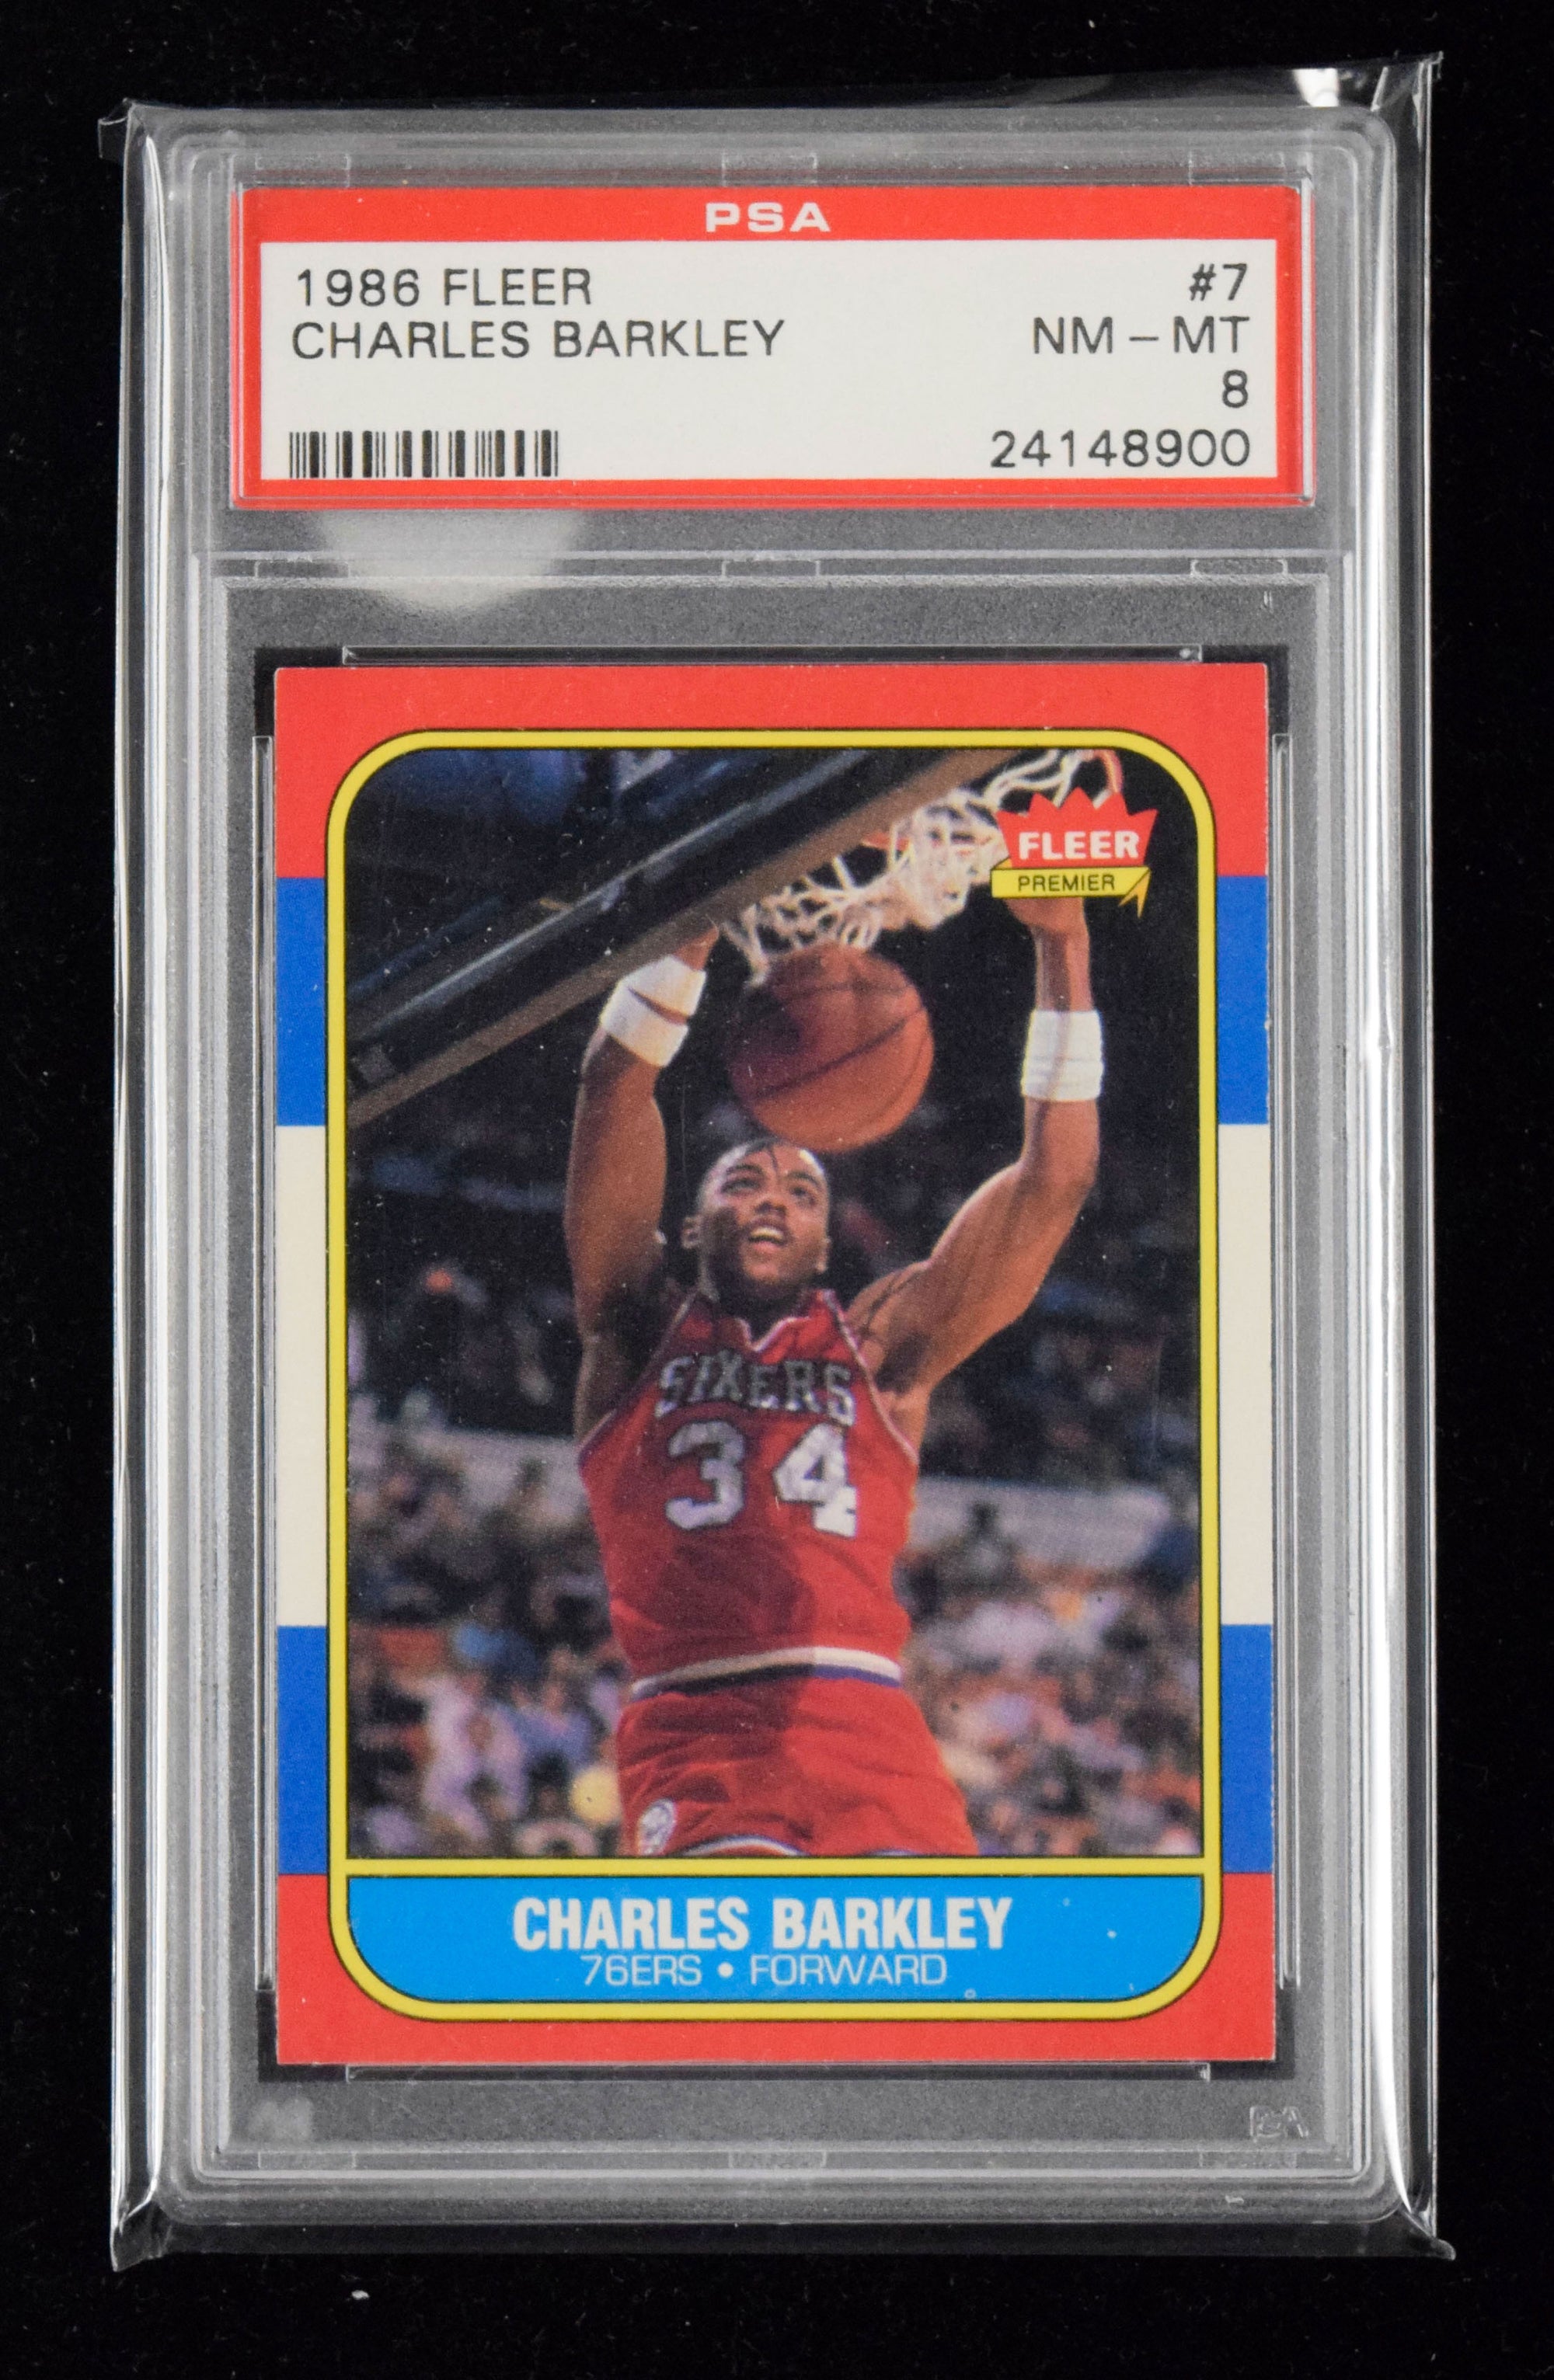 1986-87 Fleer Basketball Card - Charles Barkley